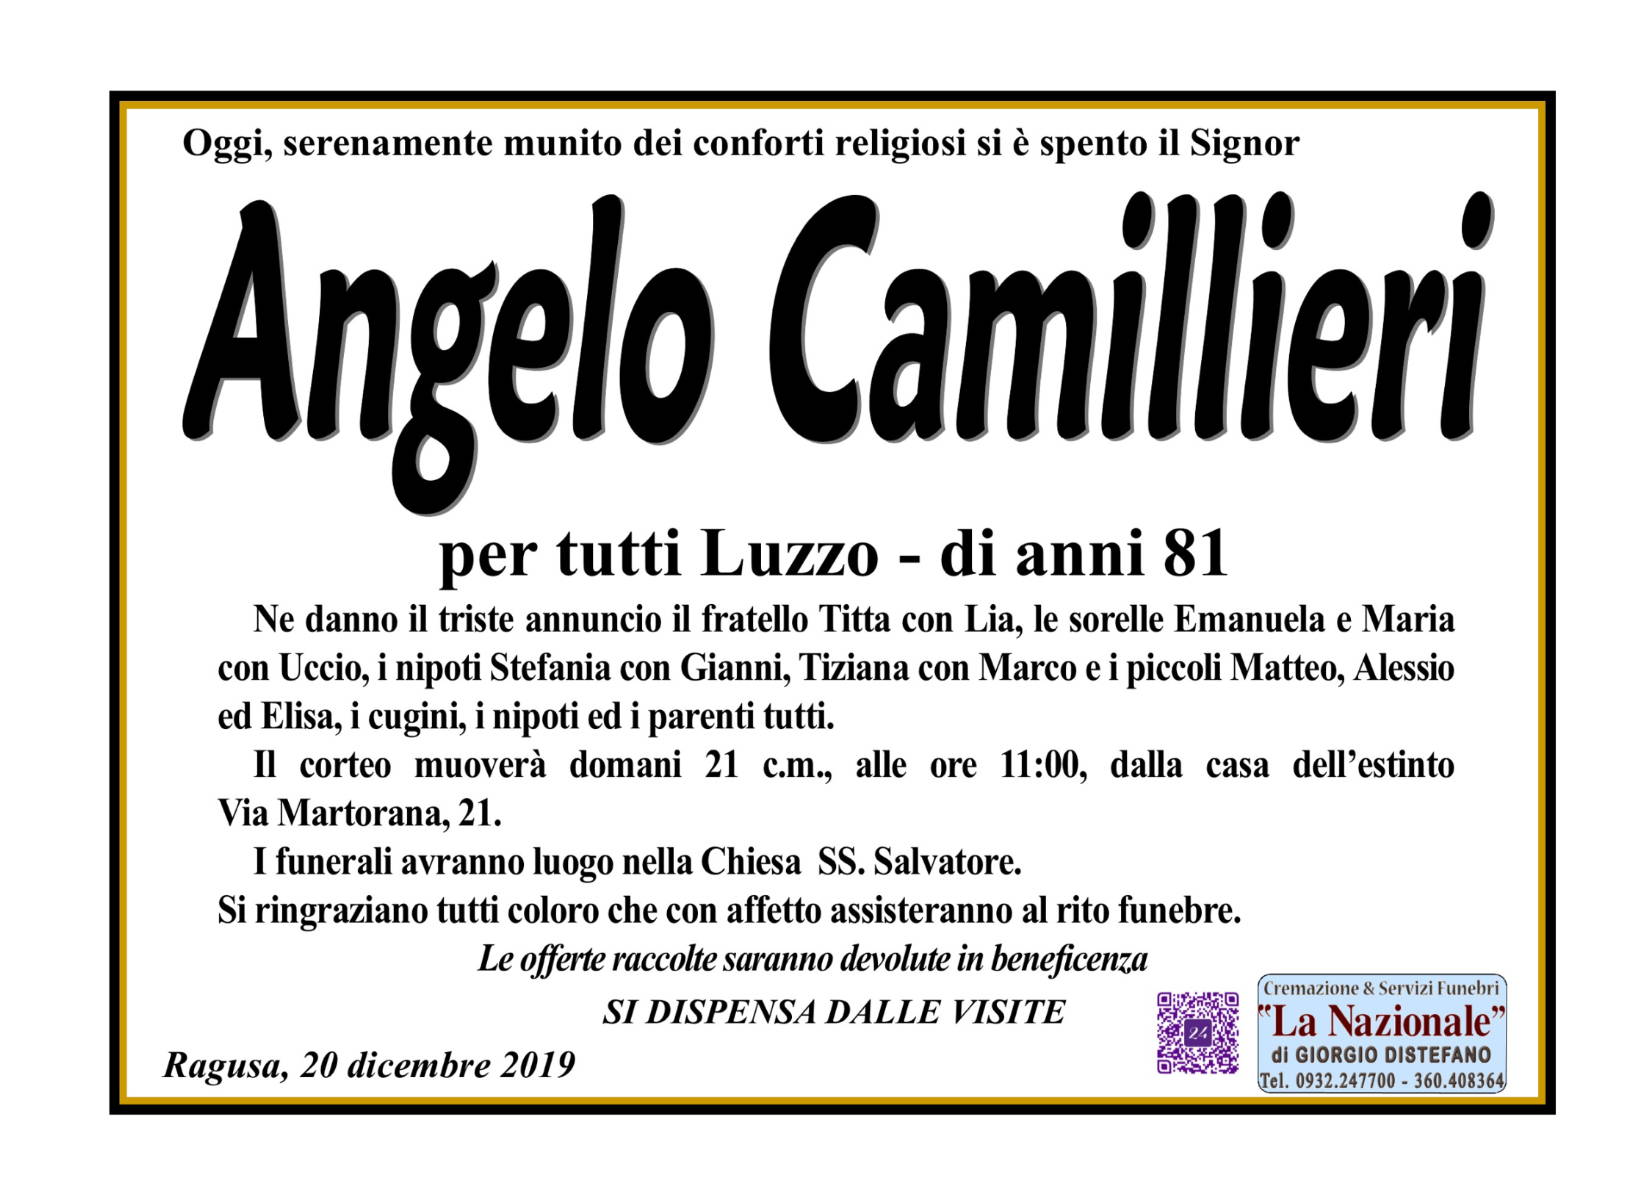 Angelo Camillieri